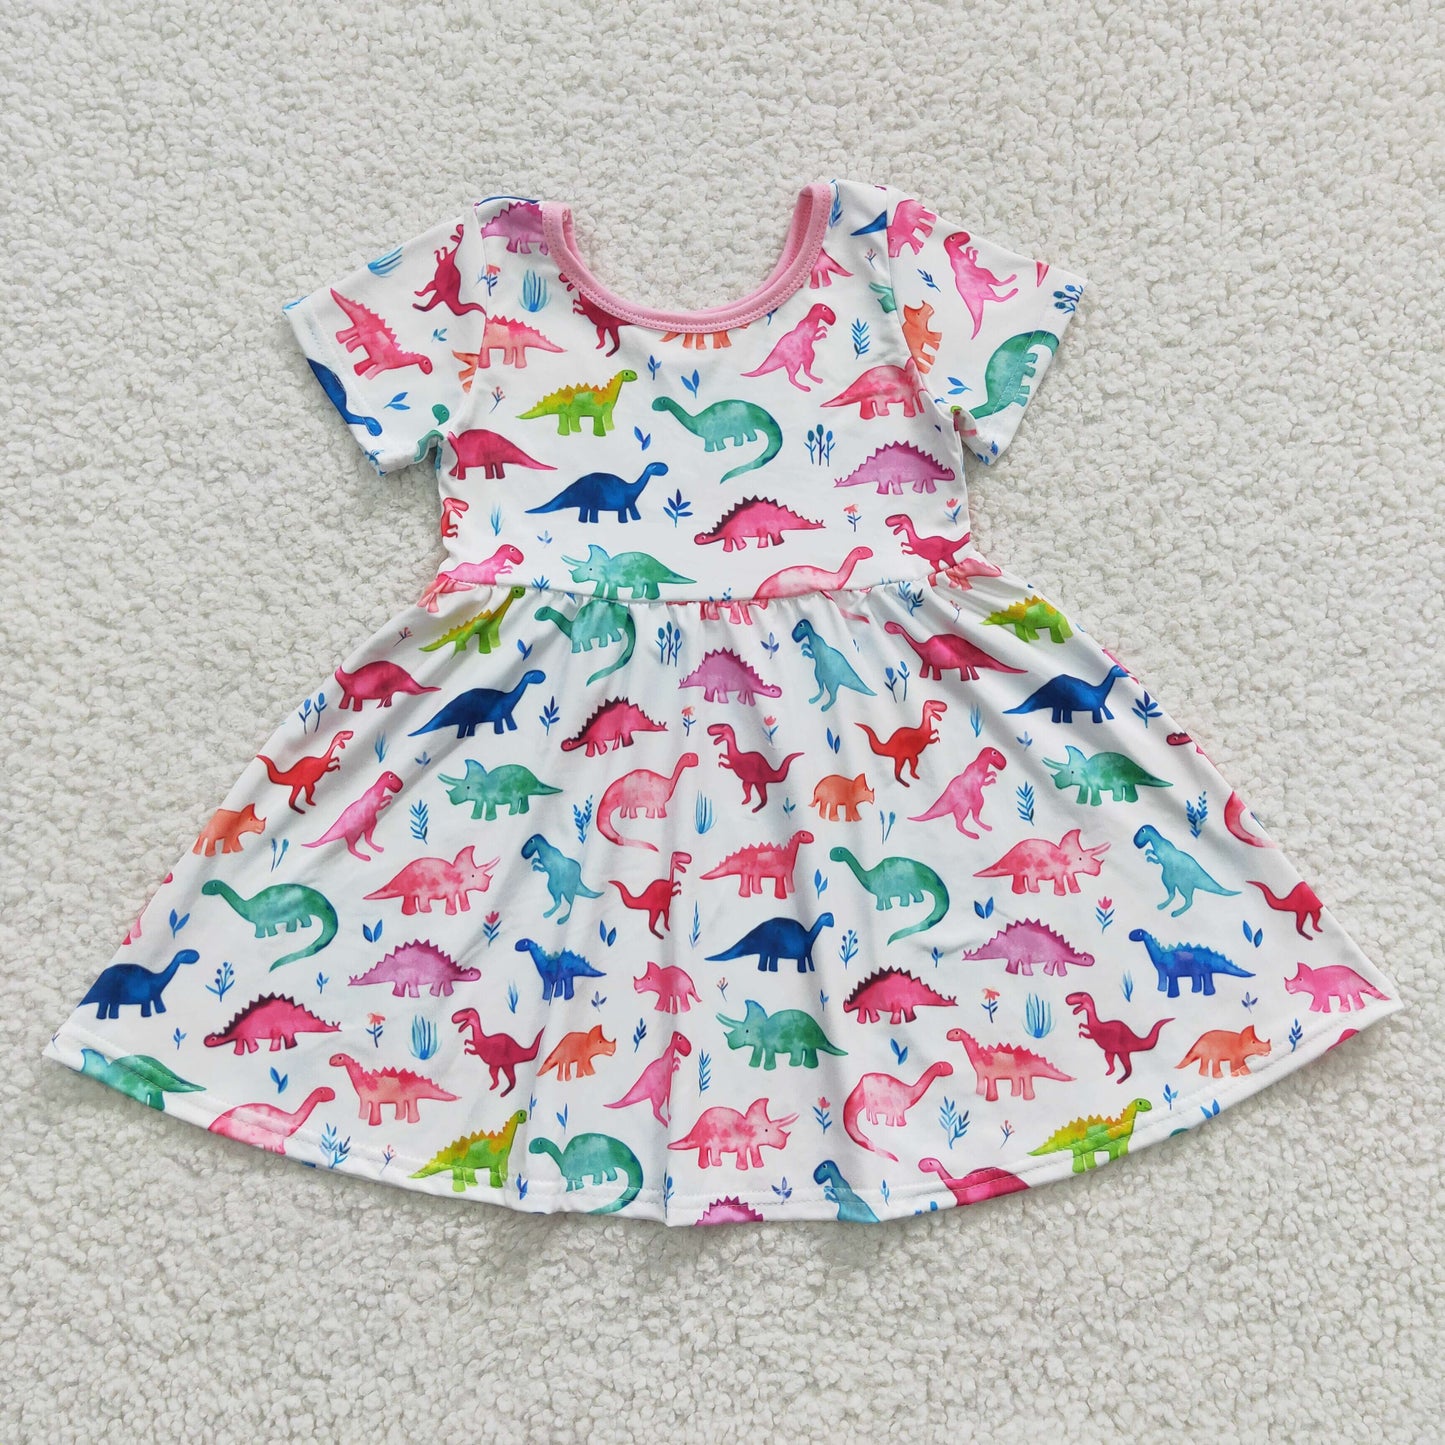 Baby girls dinosaur dress summer dress